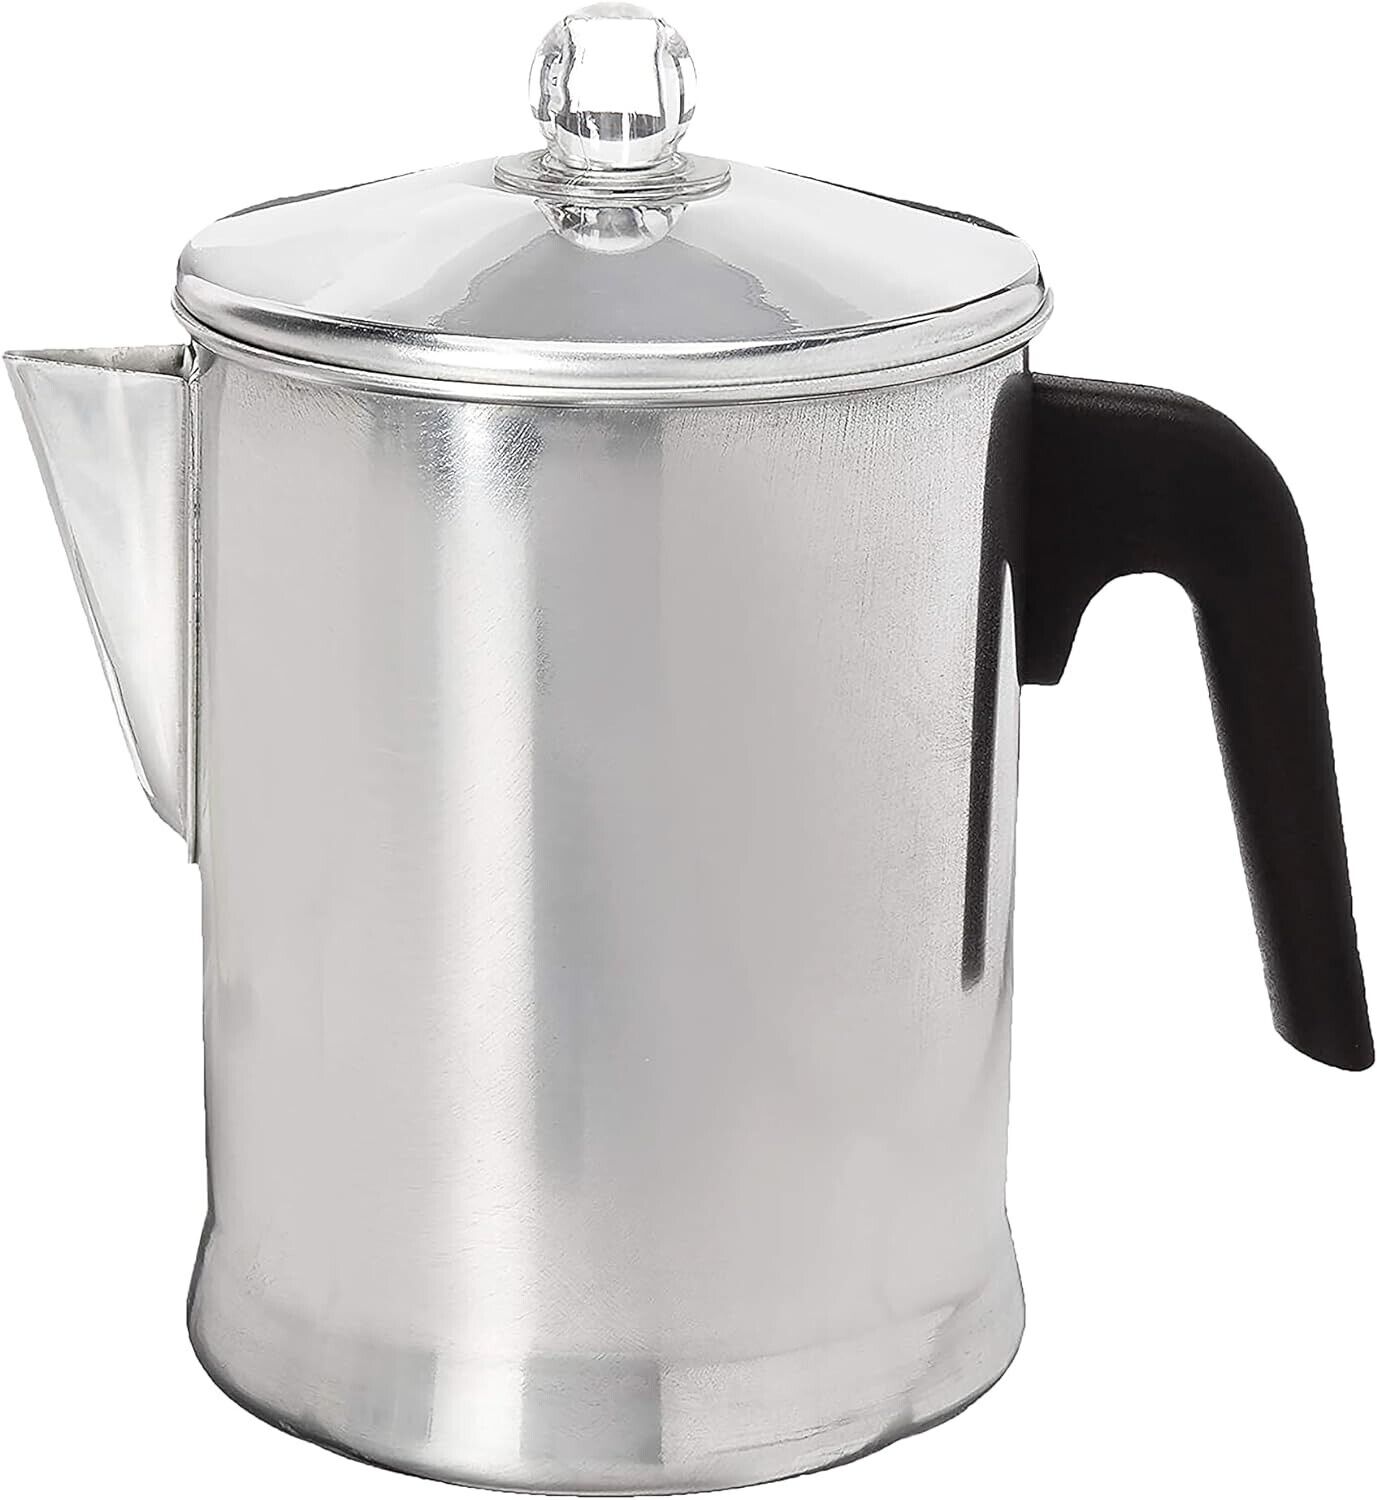 Heavy Duty Stove Top Percolator Coffee Pot Maker Aluminum Steel 9-Cup.